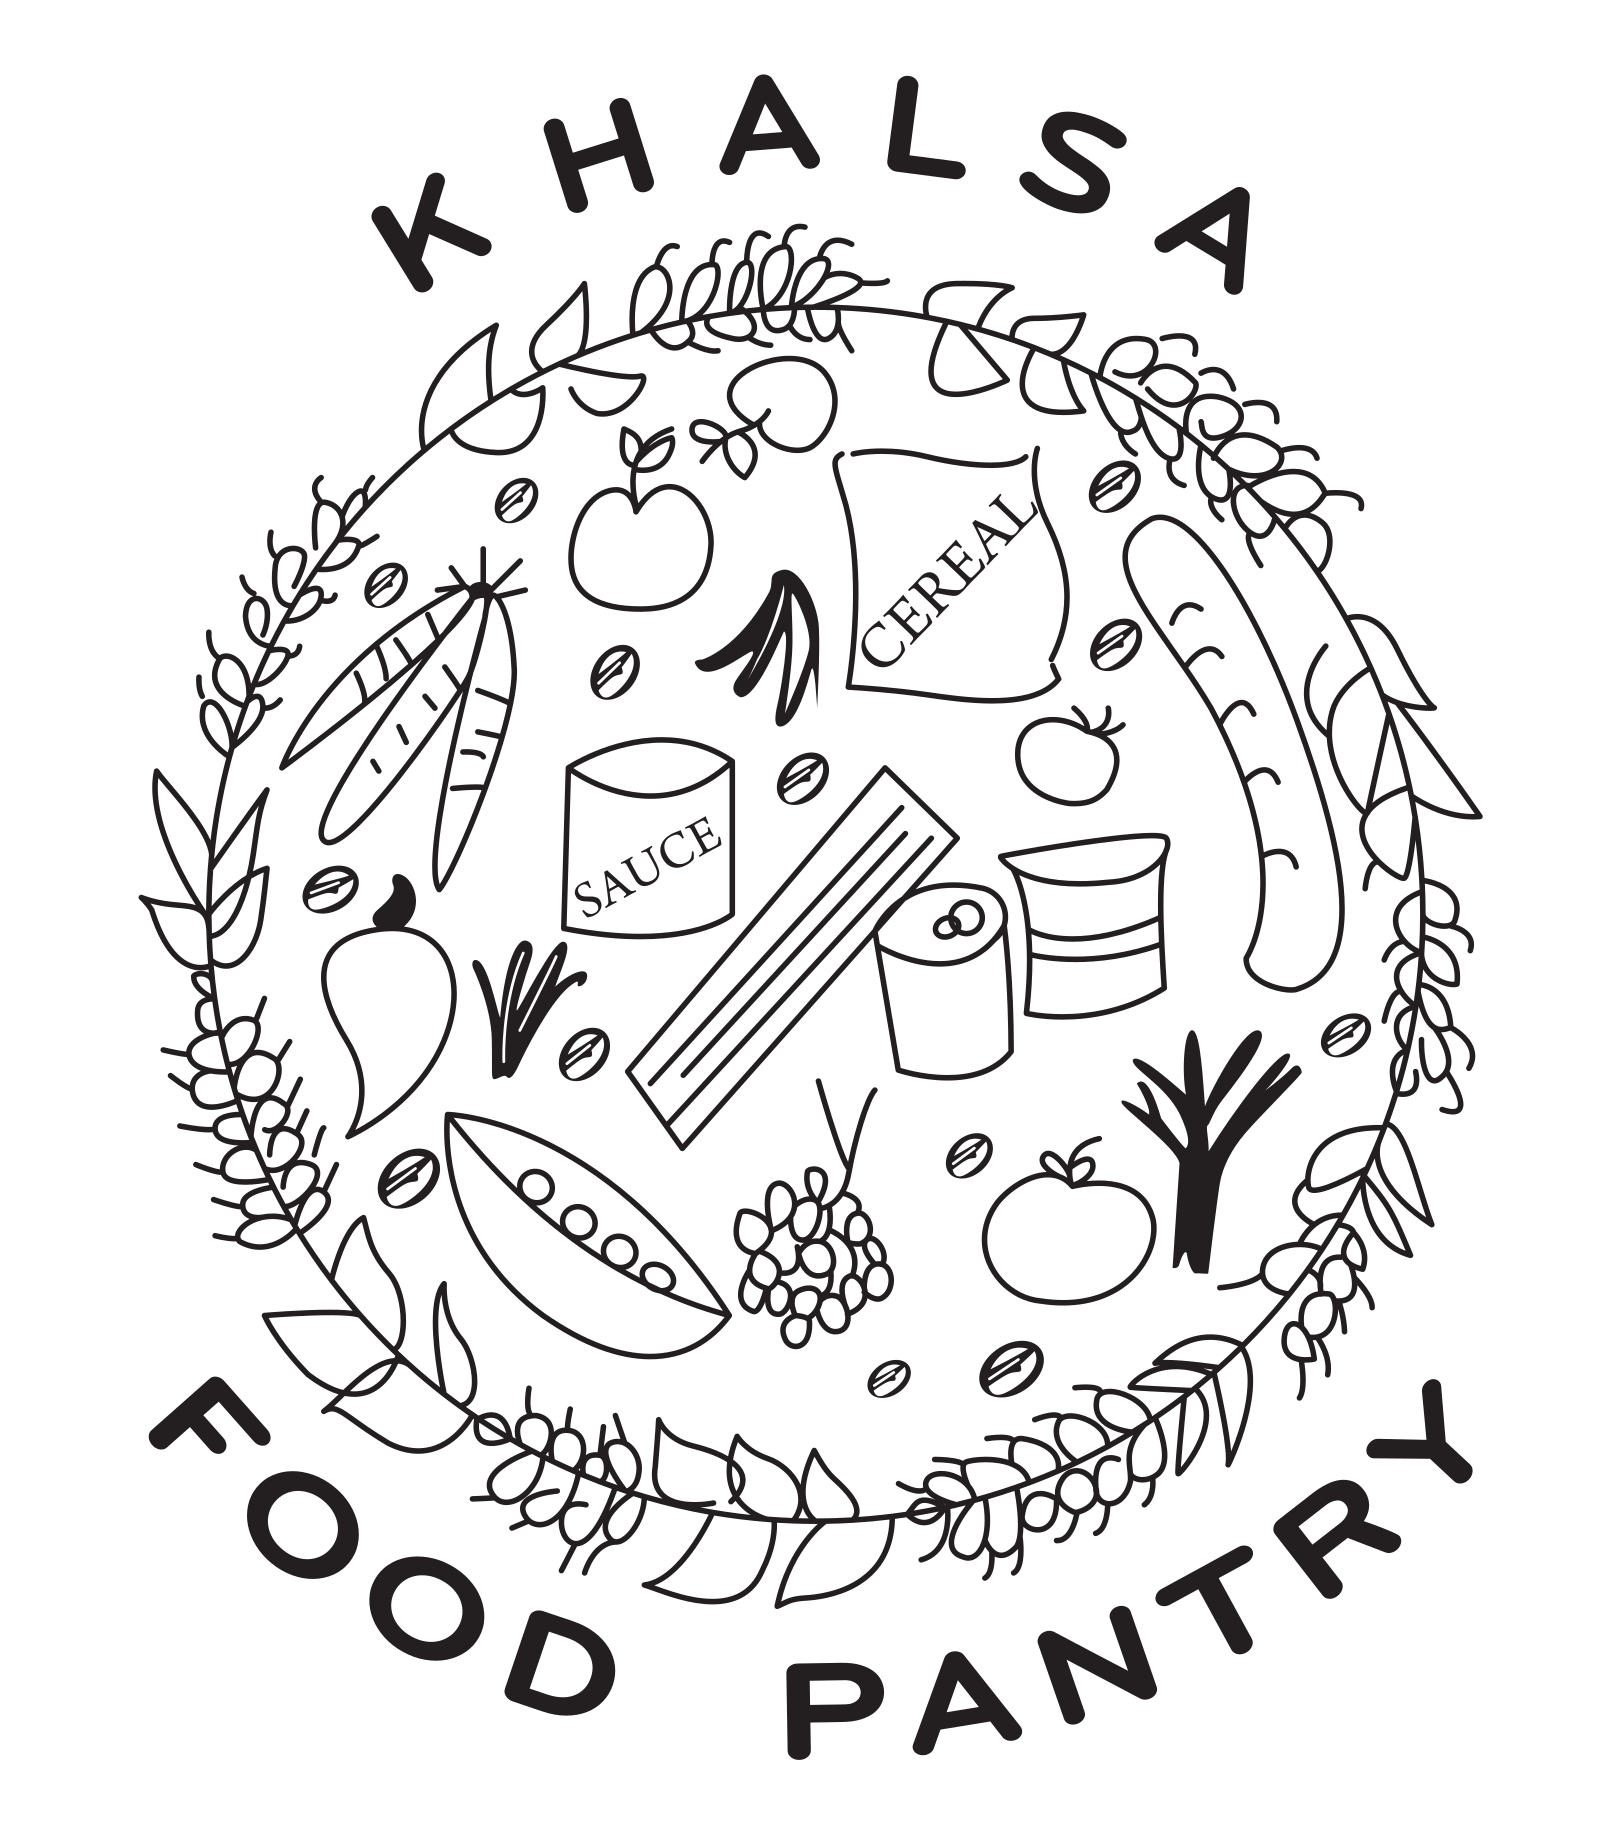 Khalsa Food Pantry 